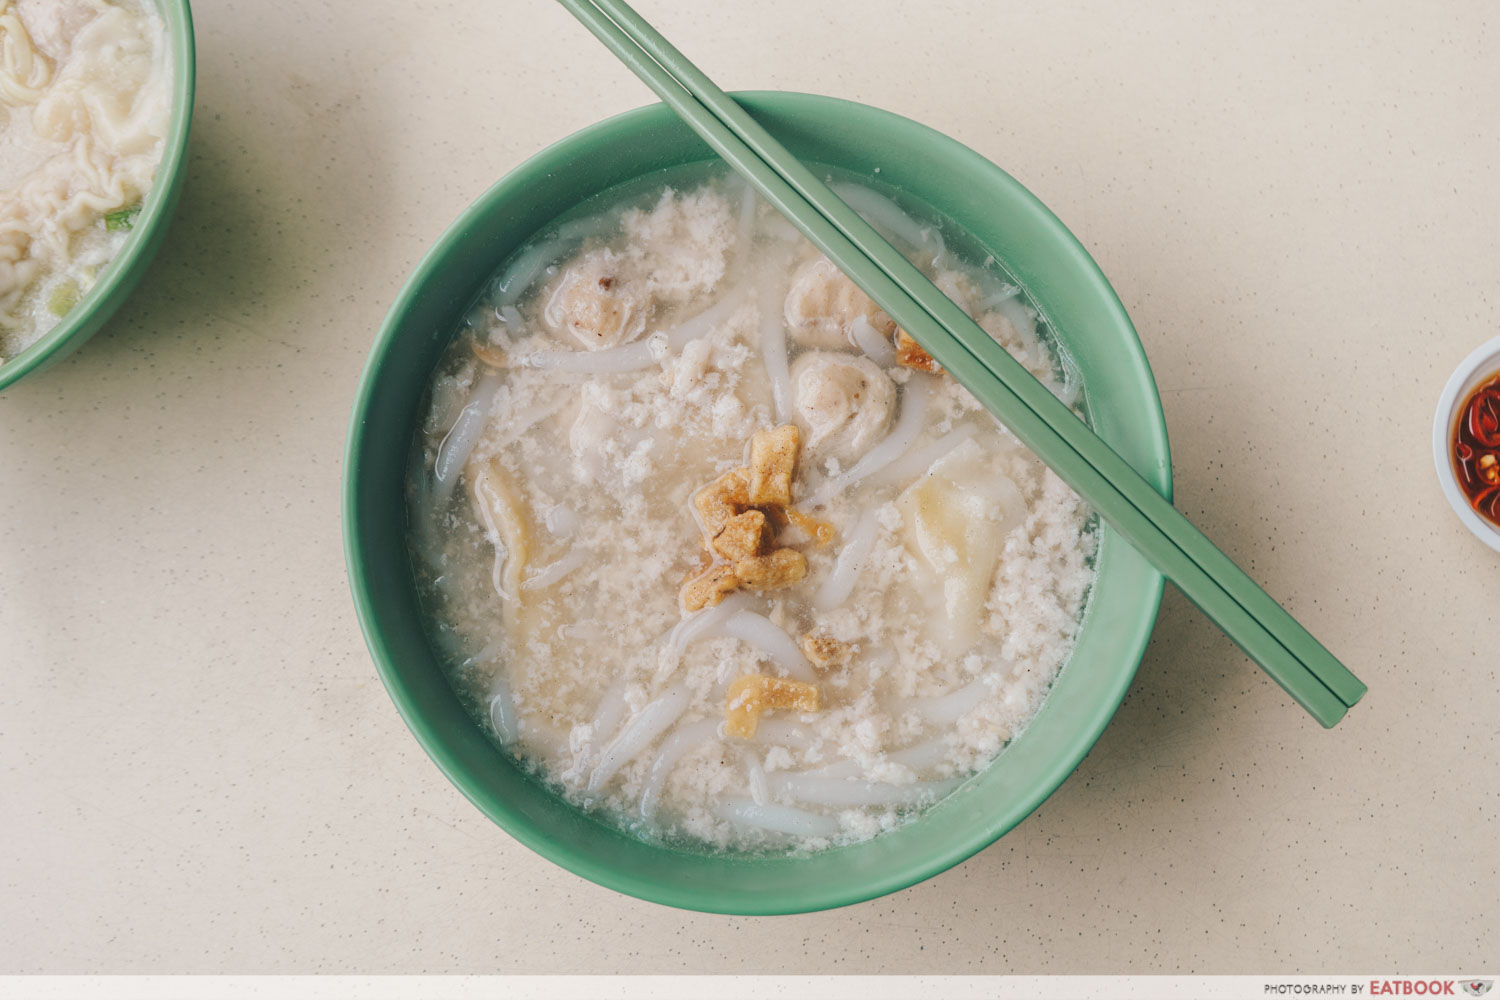 Soon Heng Pork Noodles - Mee Tai Bak big bowl